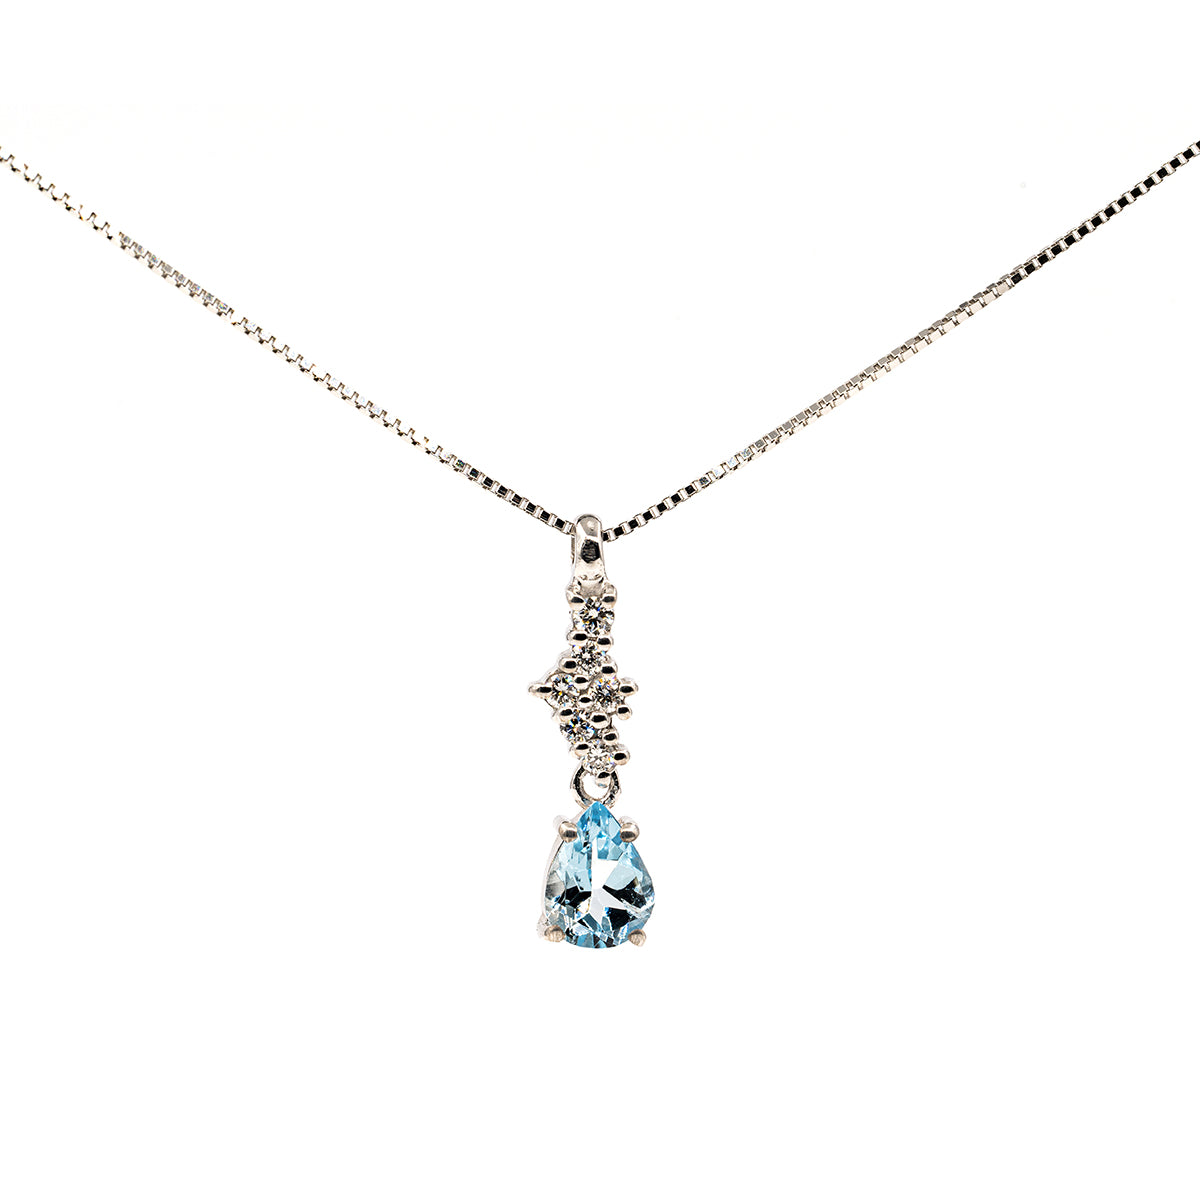 Gold necklace 22 with aquamarine.